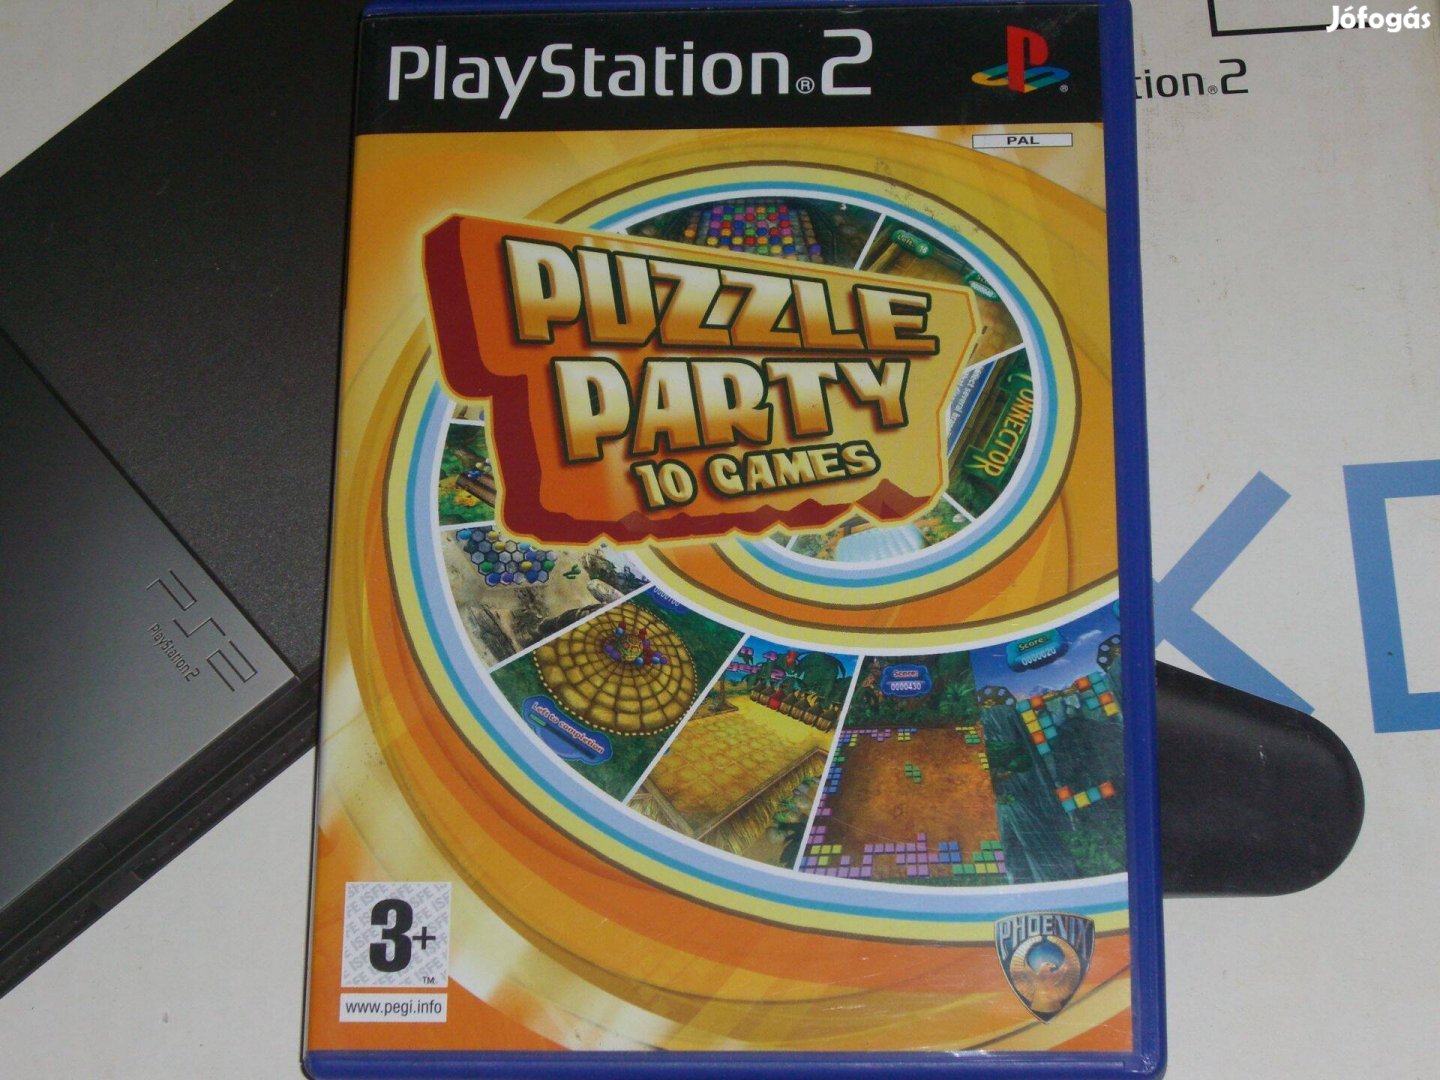 Puzzle Party 10 Games Playstation 2 eredeti lemez eladó